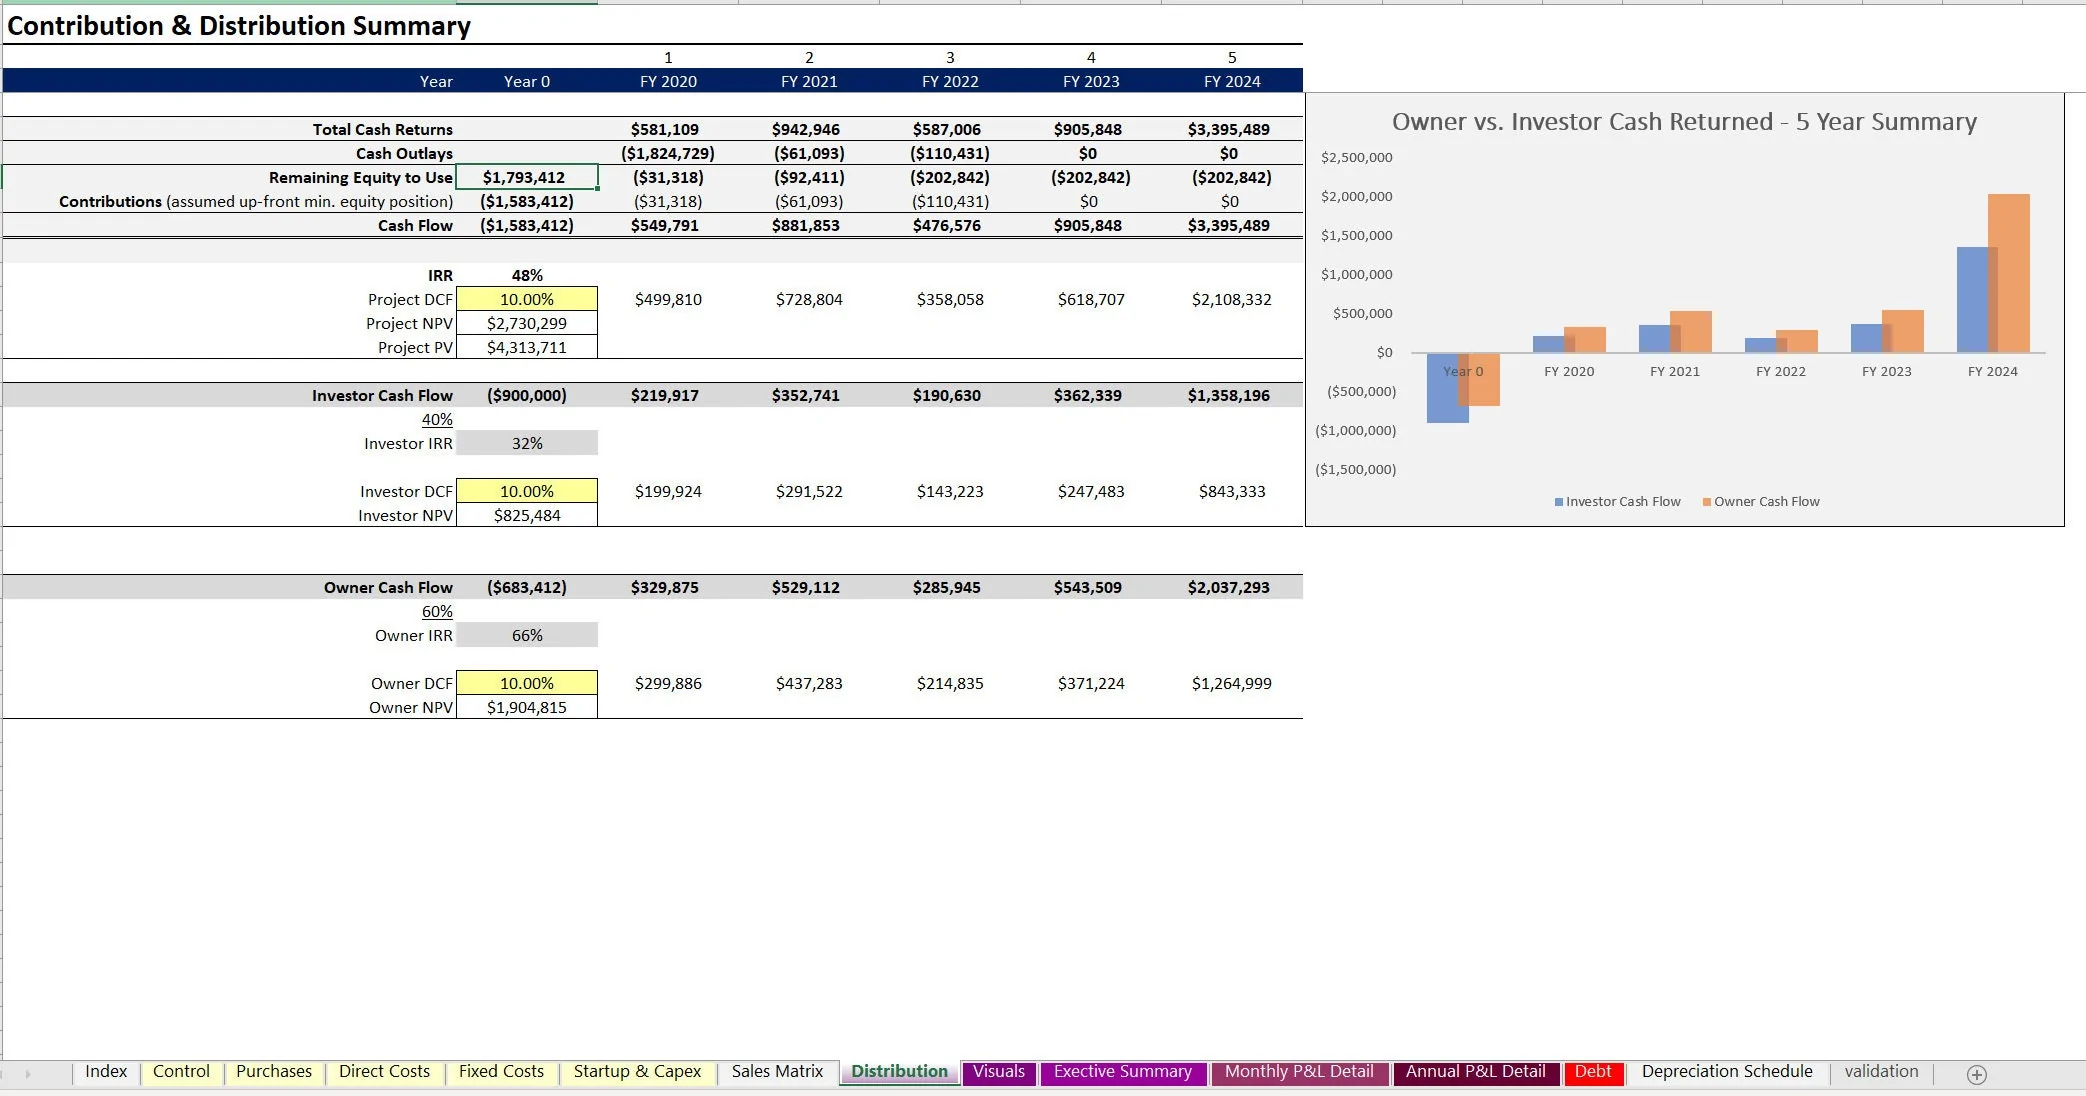 3D Printing Fleet: Startup Financial Model (Excel workbook (XLSX)) Preview Image